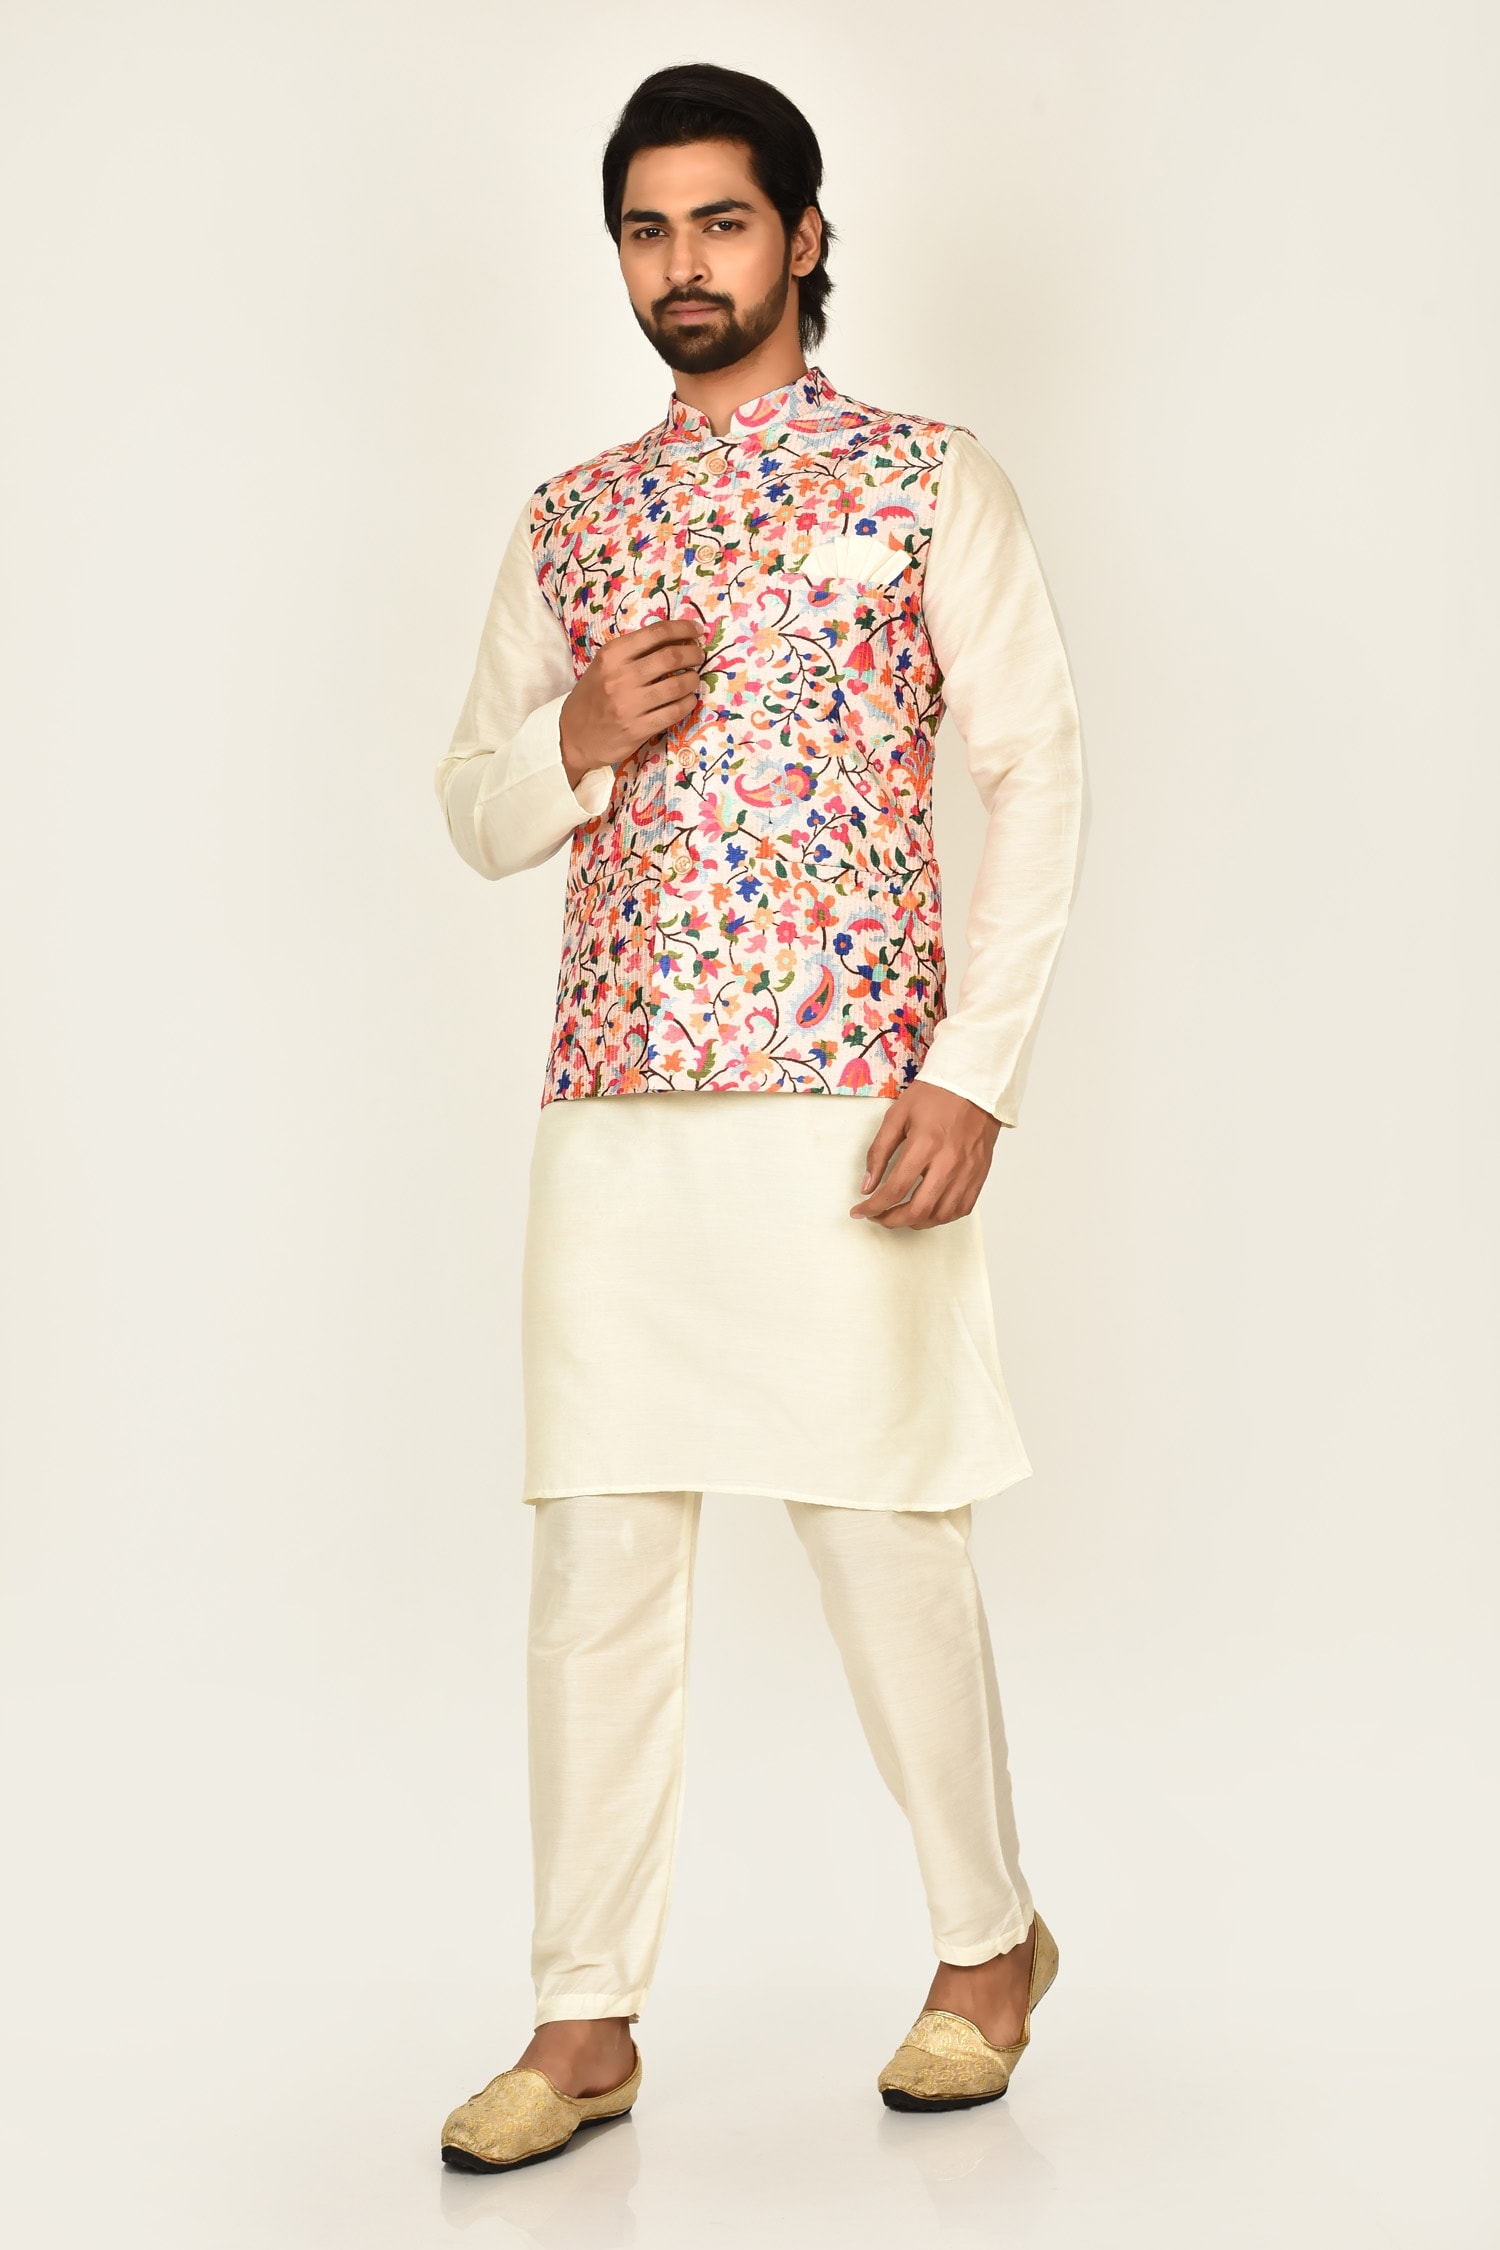 Samyukta Singhania Multi Color Cotton Silk Printed Floral Bundi And Kurta Set For Men